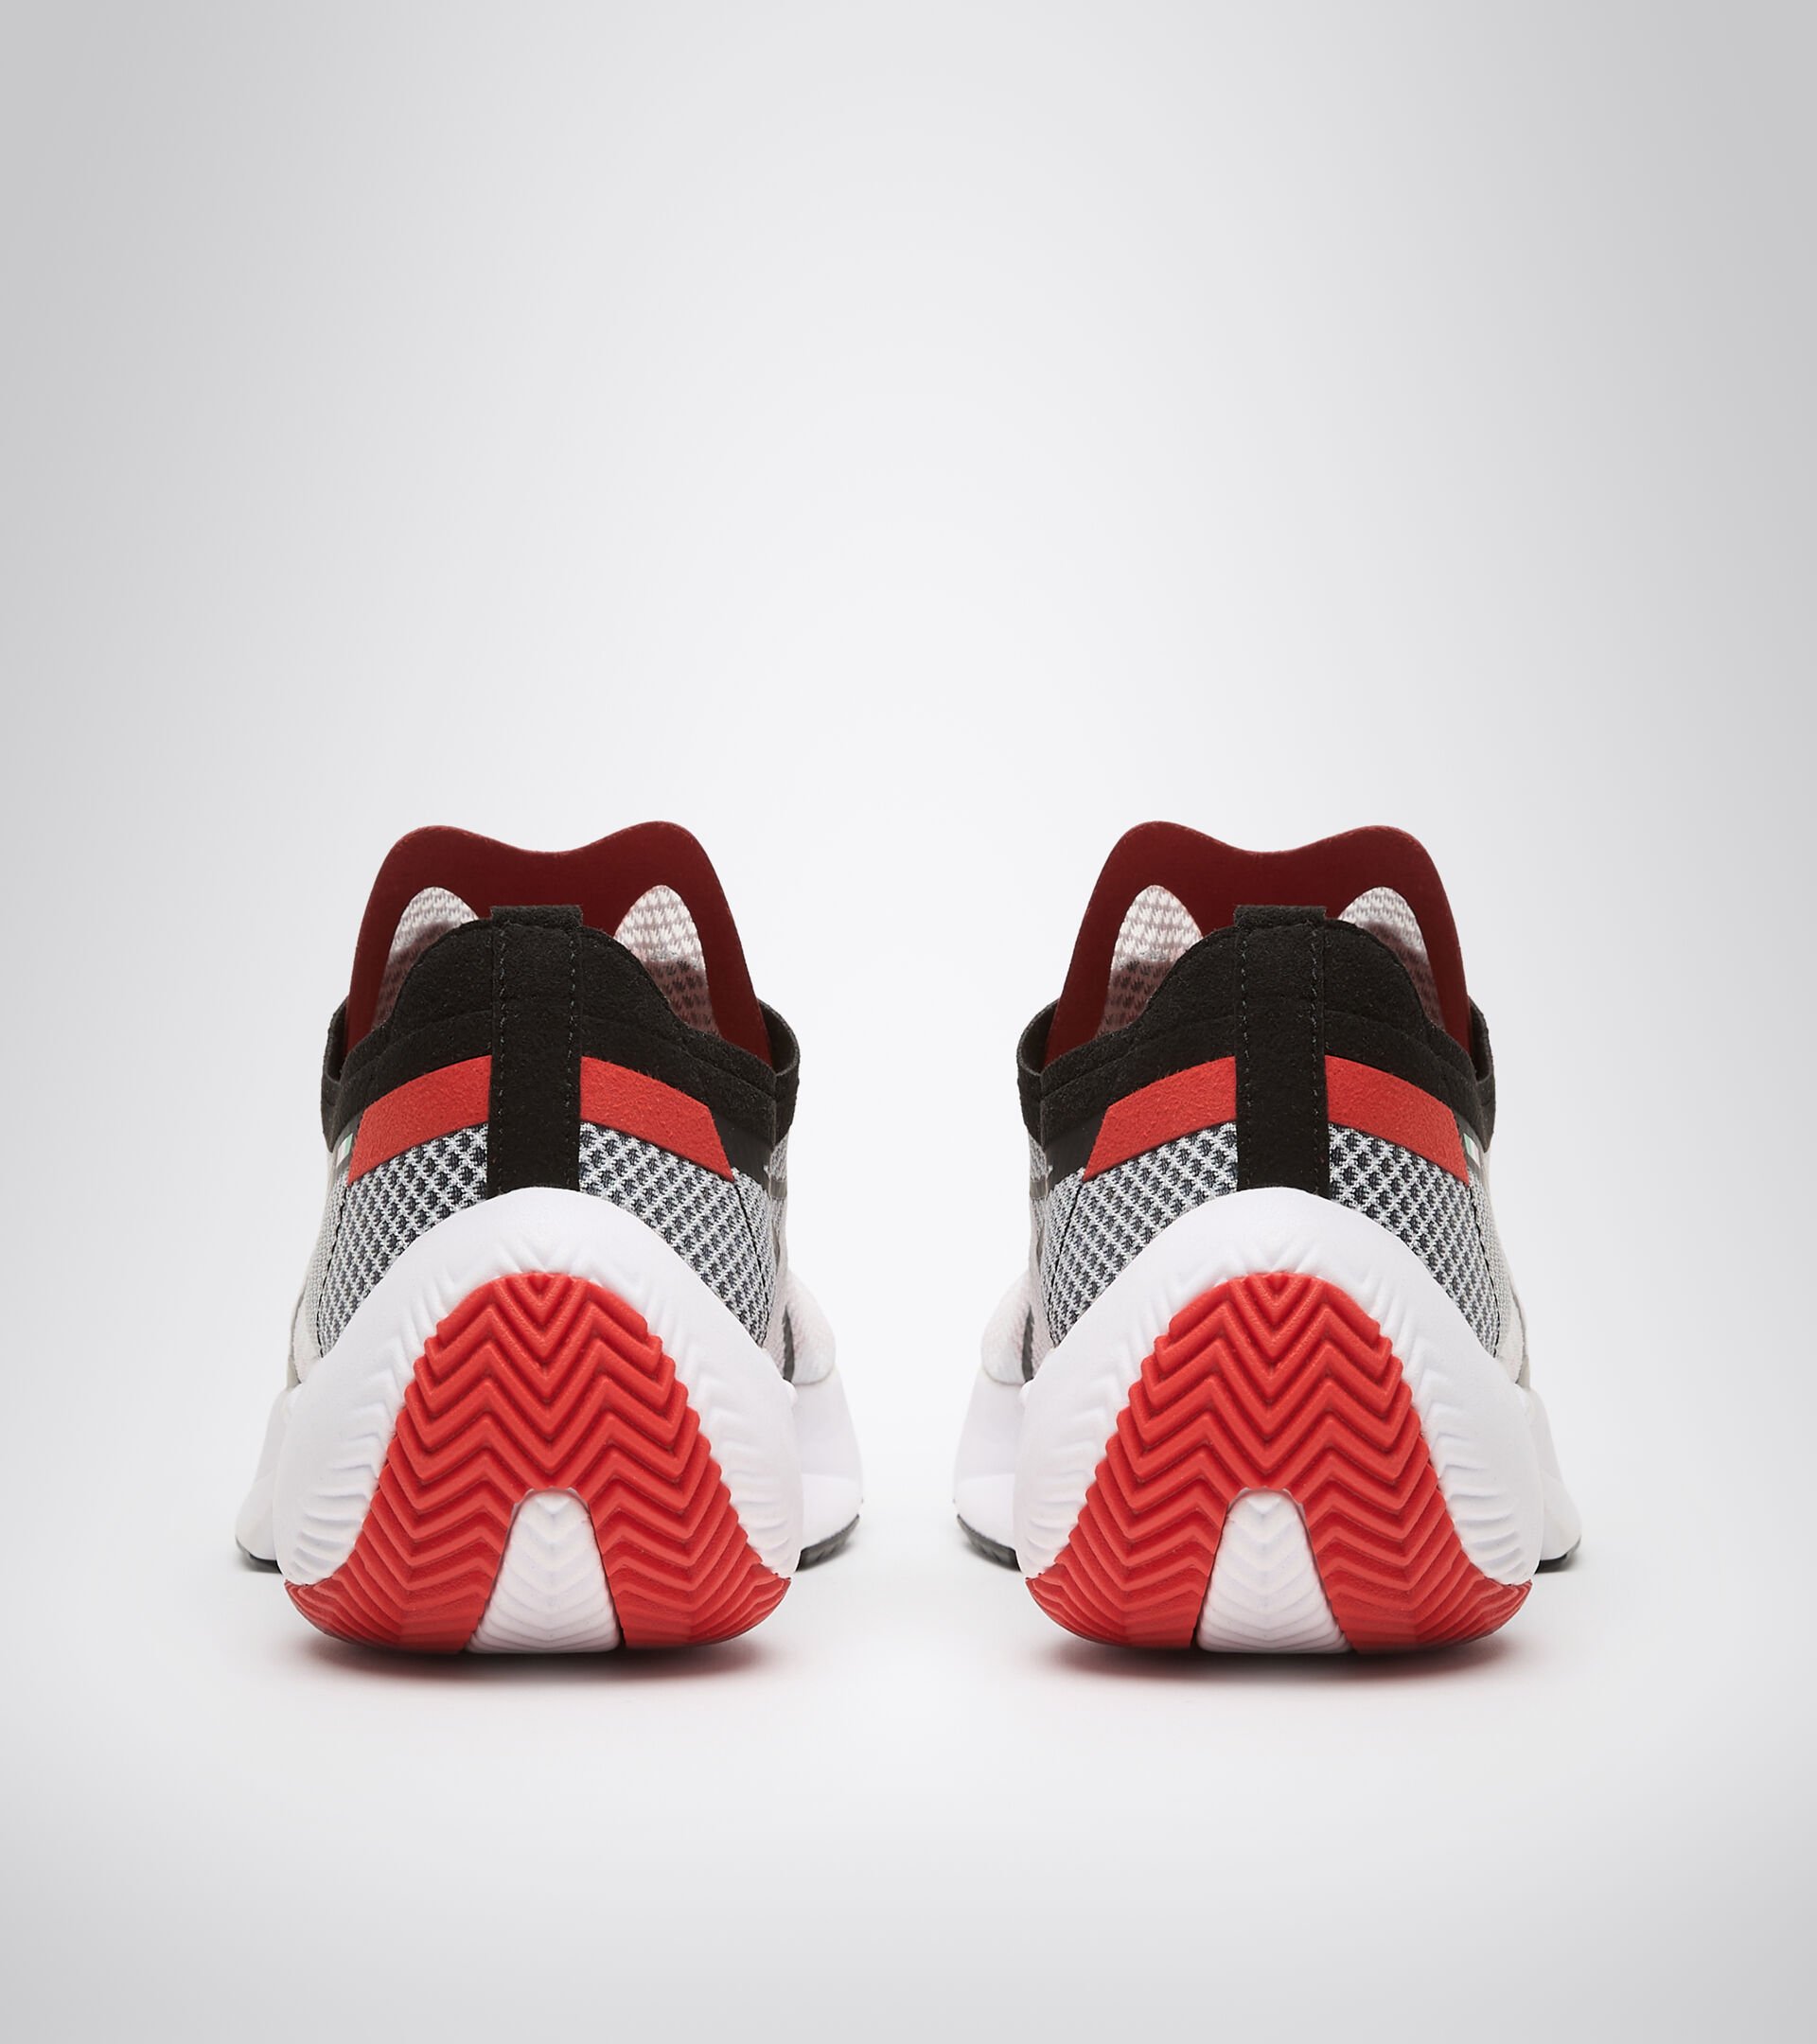 Running shoe - Men EQUIPE CORSA 2 WHITE/BLACK/FIERY RED - Diadora